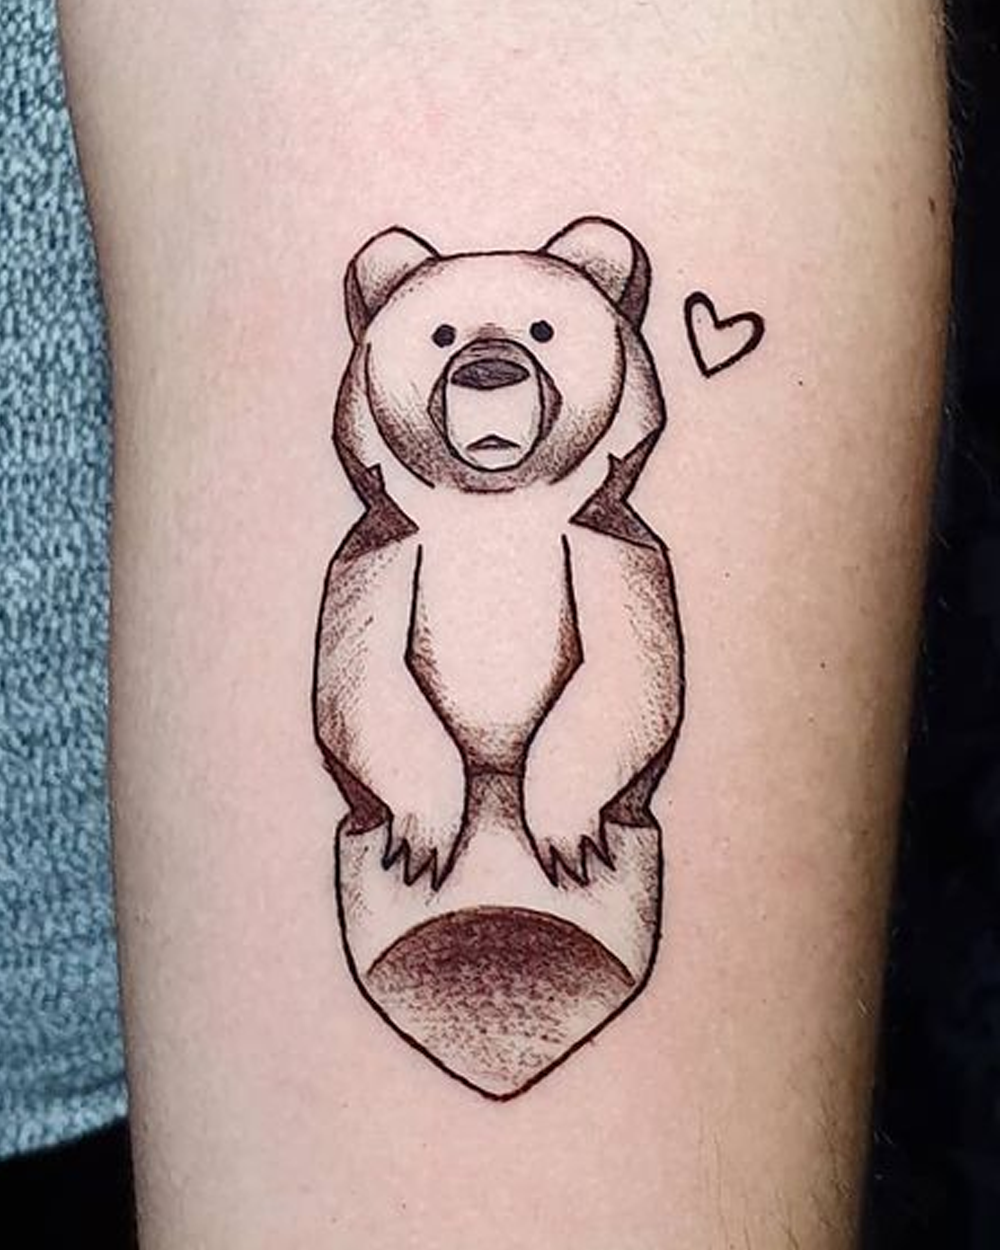 Can someone help me draw my teddy bear tattoo? : r/DrawMyTattoo